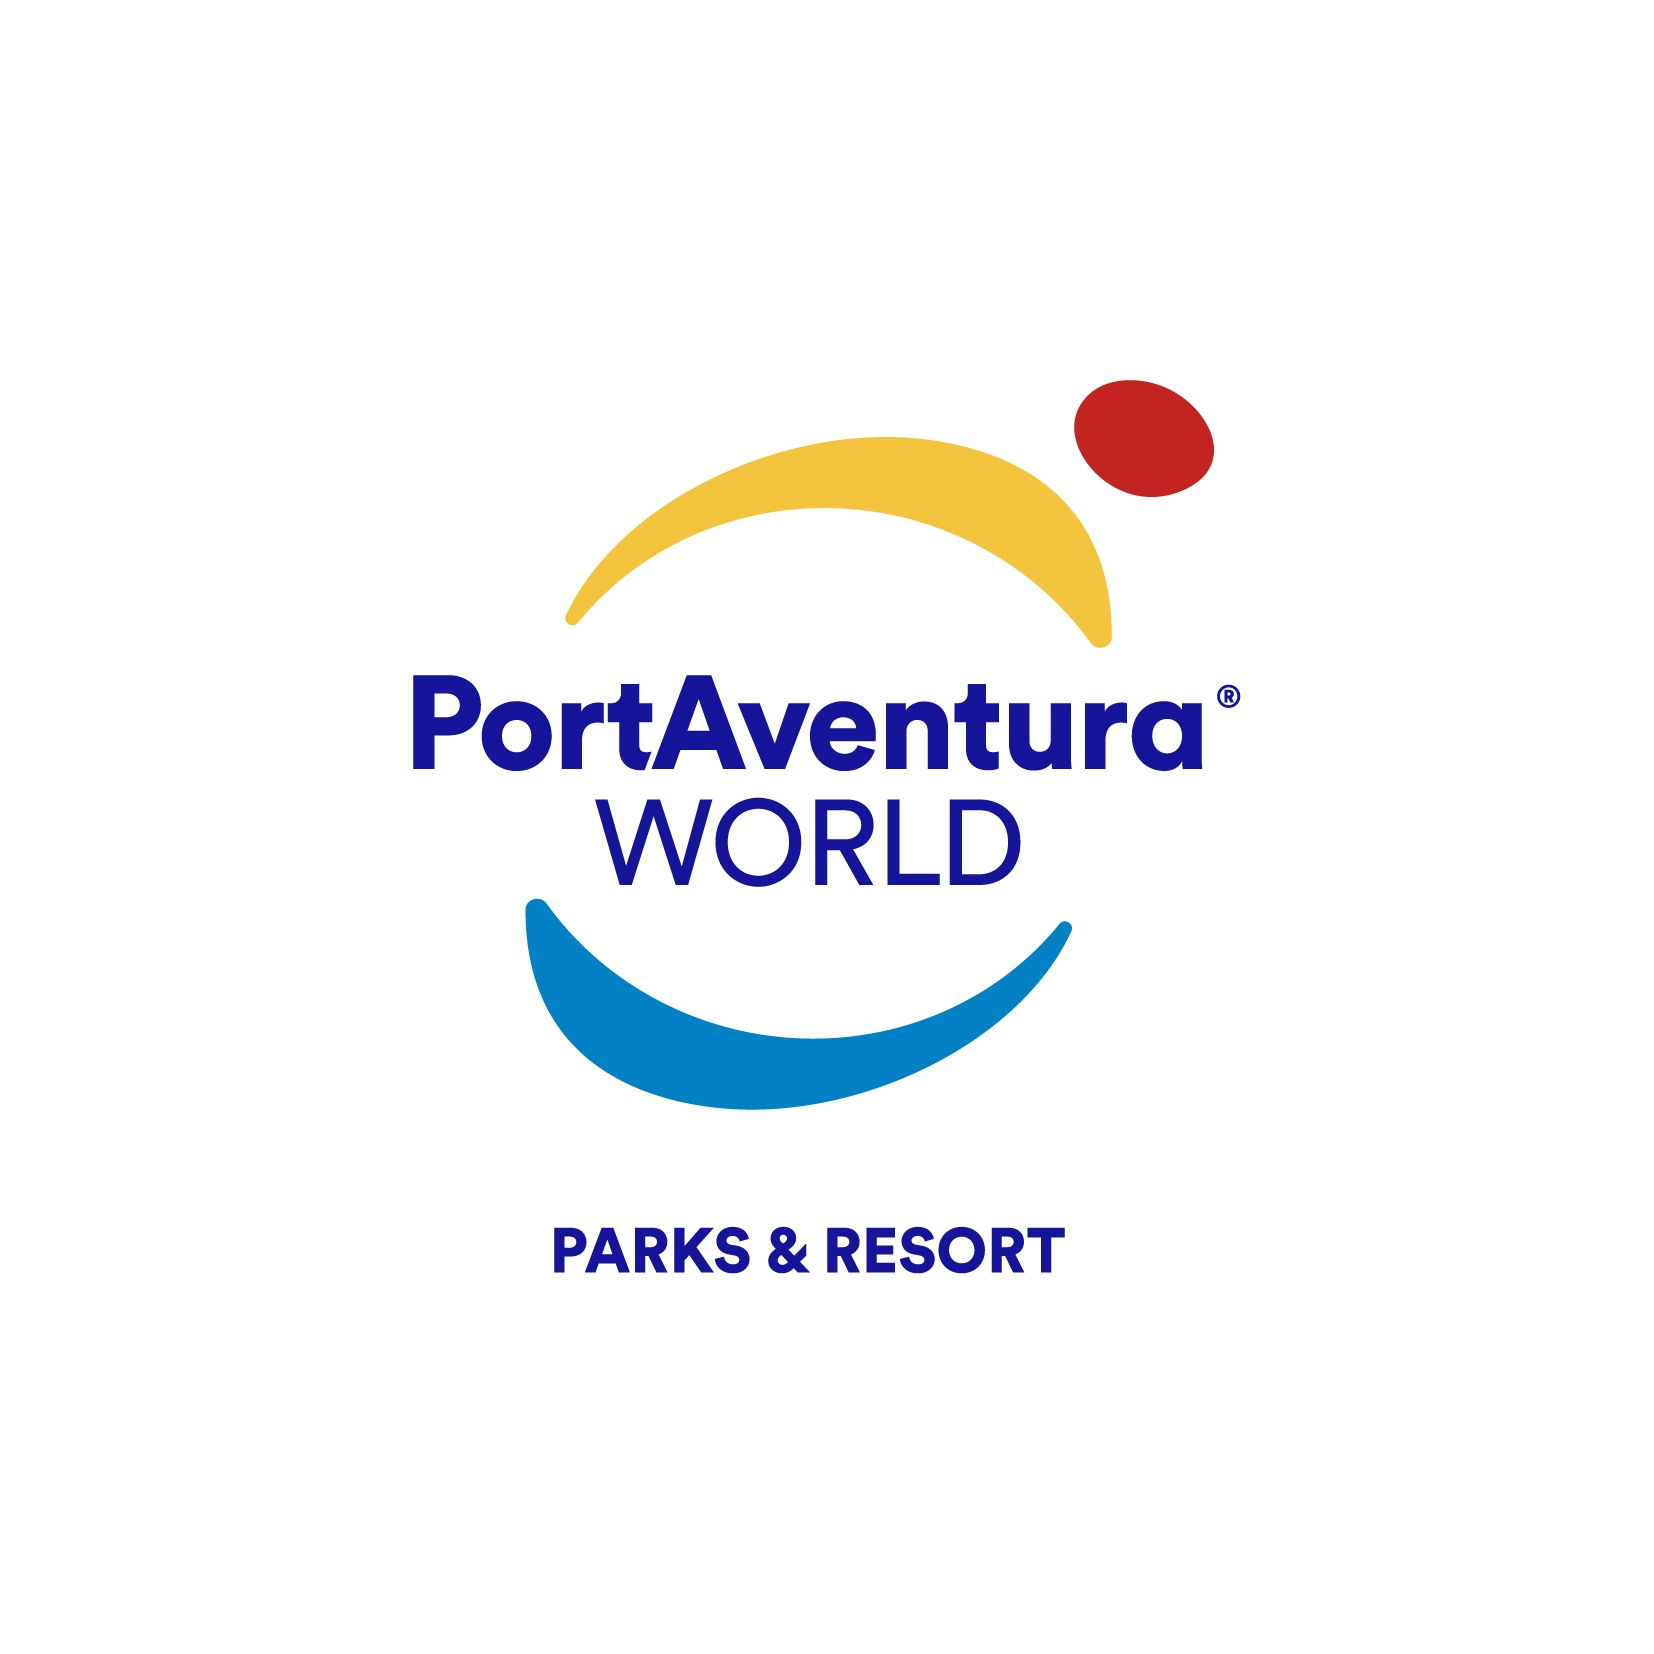 PortAventura-World-ParksResort-Brand-Master_COLOR_PLANOI_FONDO_CLARO.png